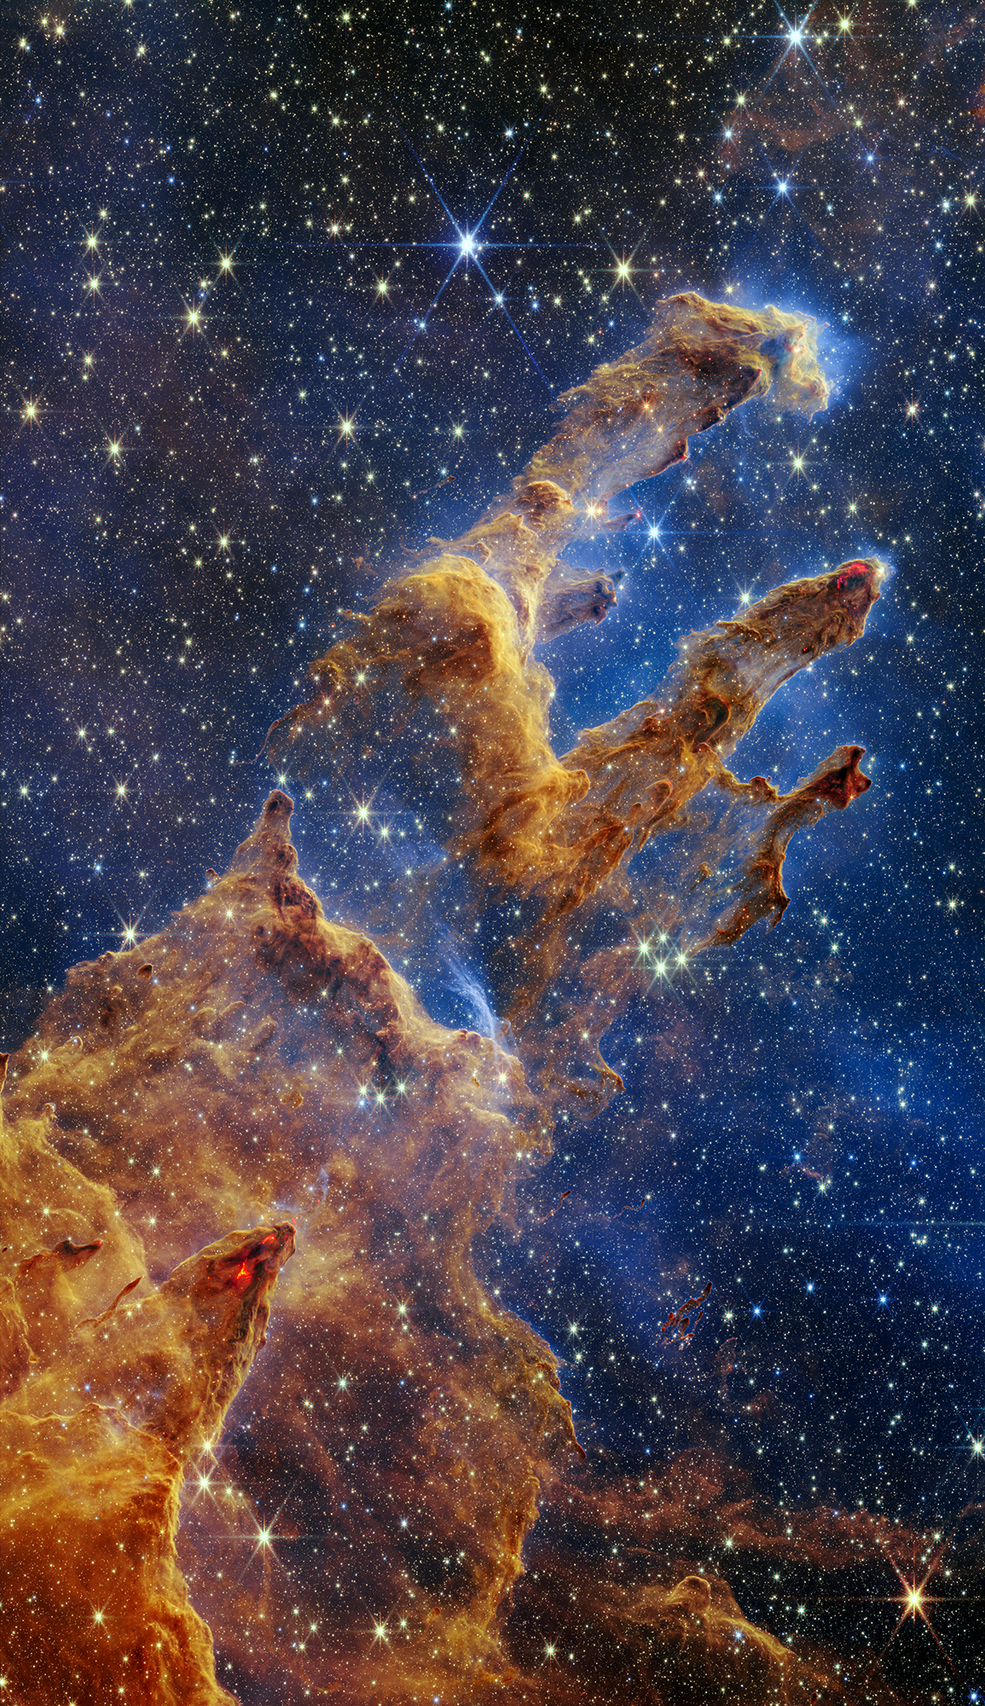 NASA James Webb Space Telescope star filled Pillars of Creation image